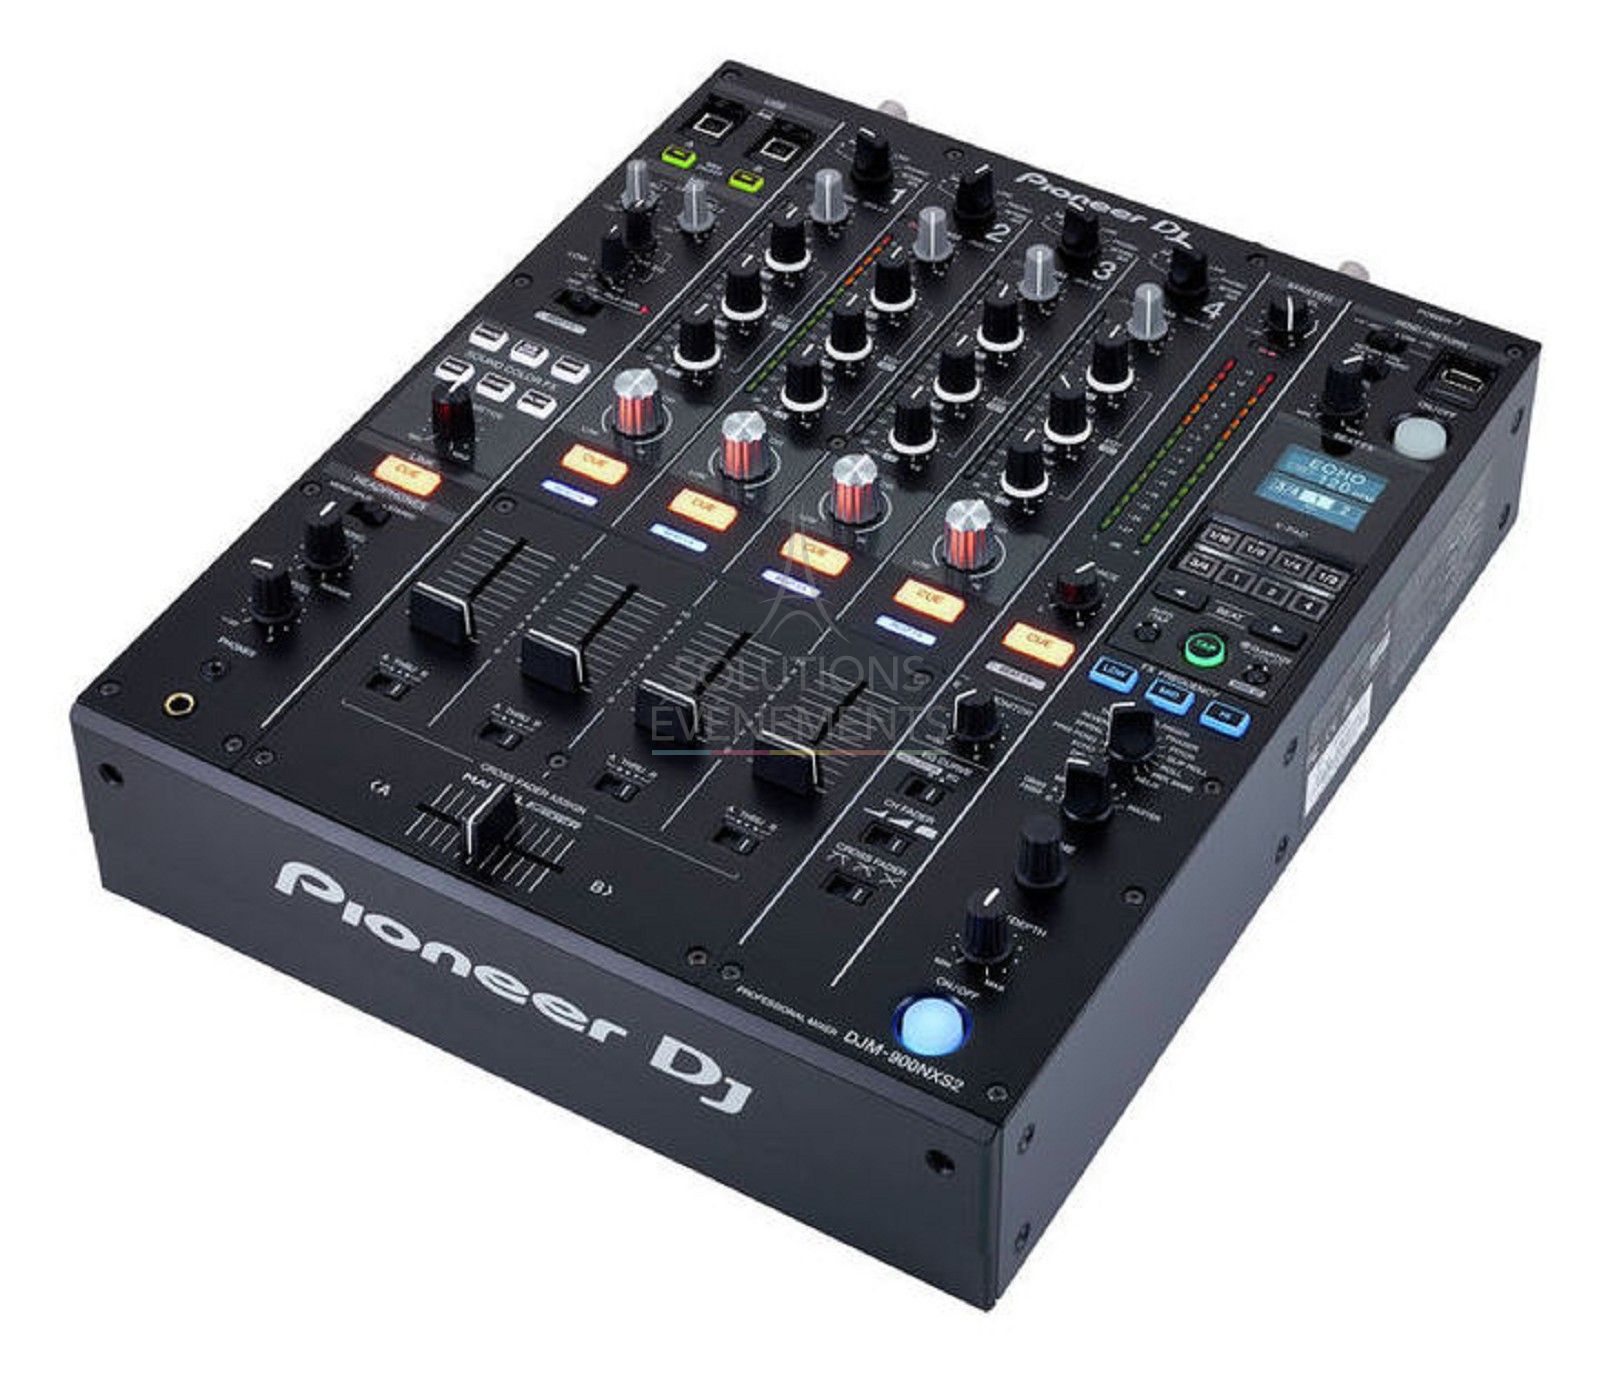 Location de table de mixage PRO DJ. DJM900 NXS2 Pioneer